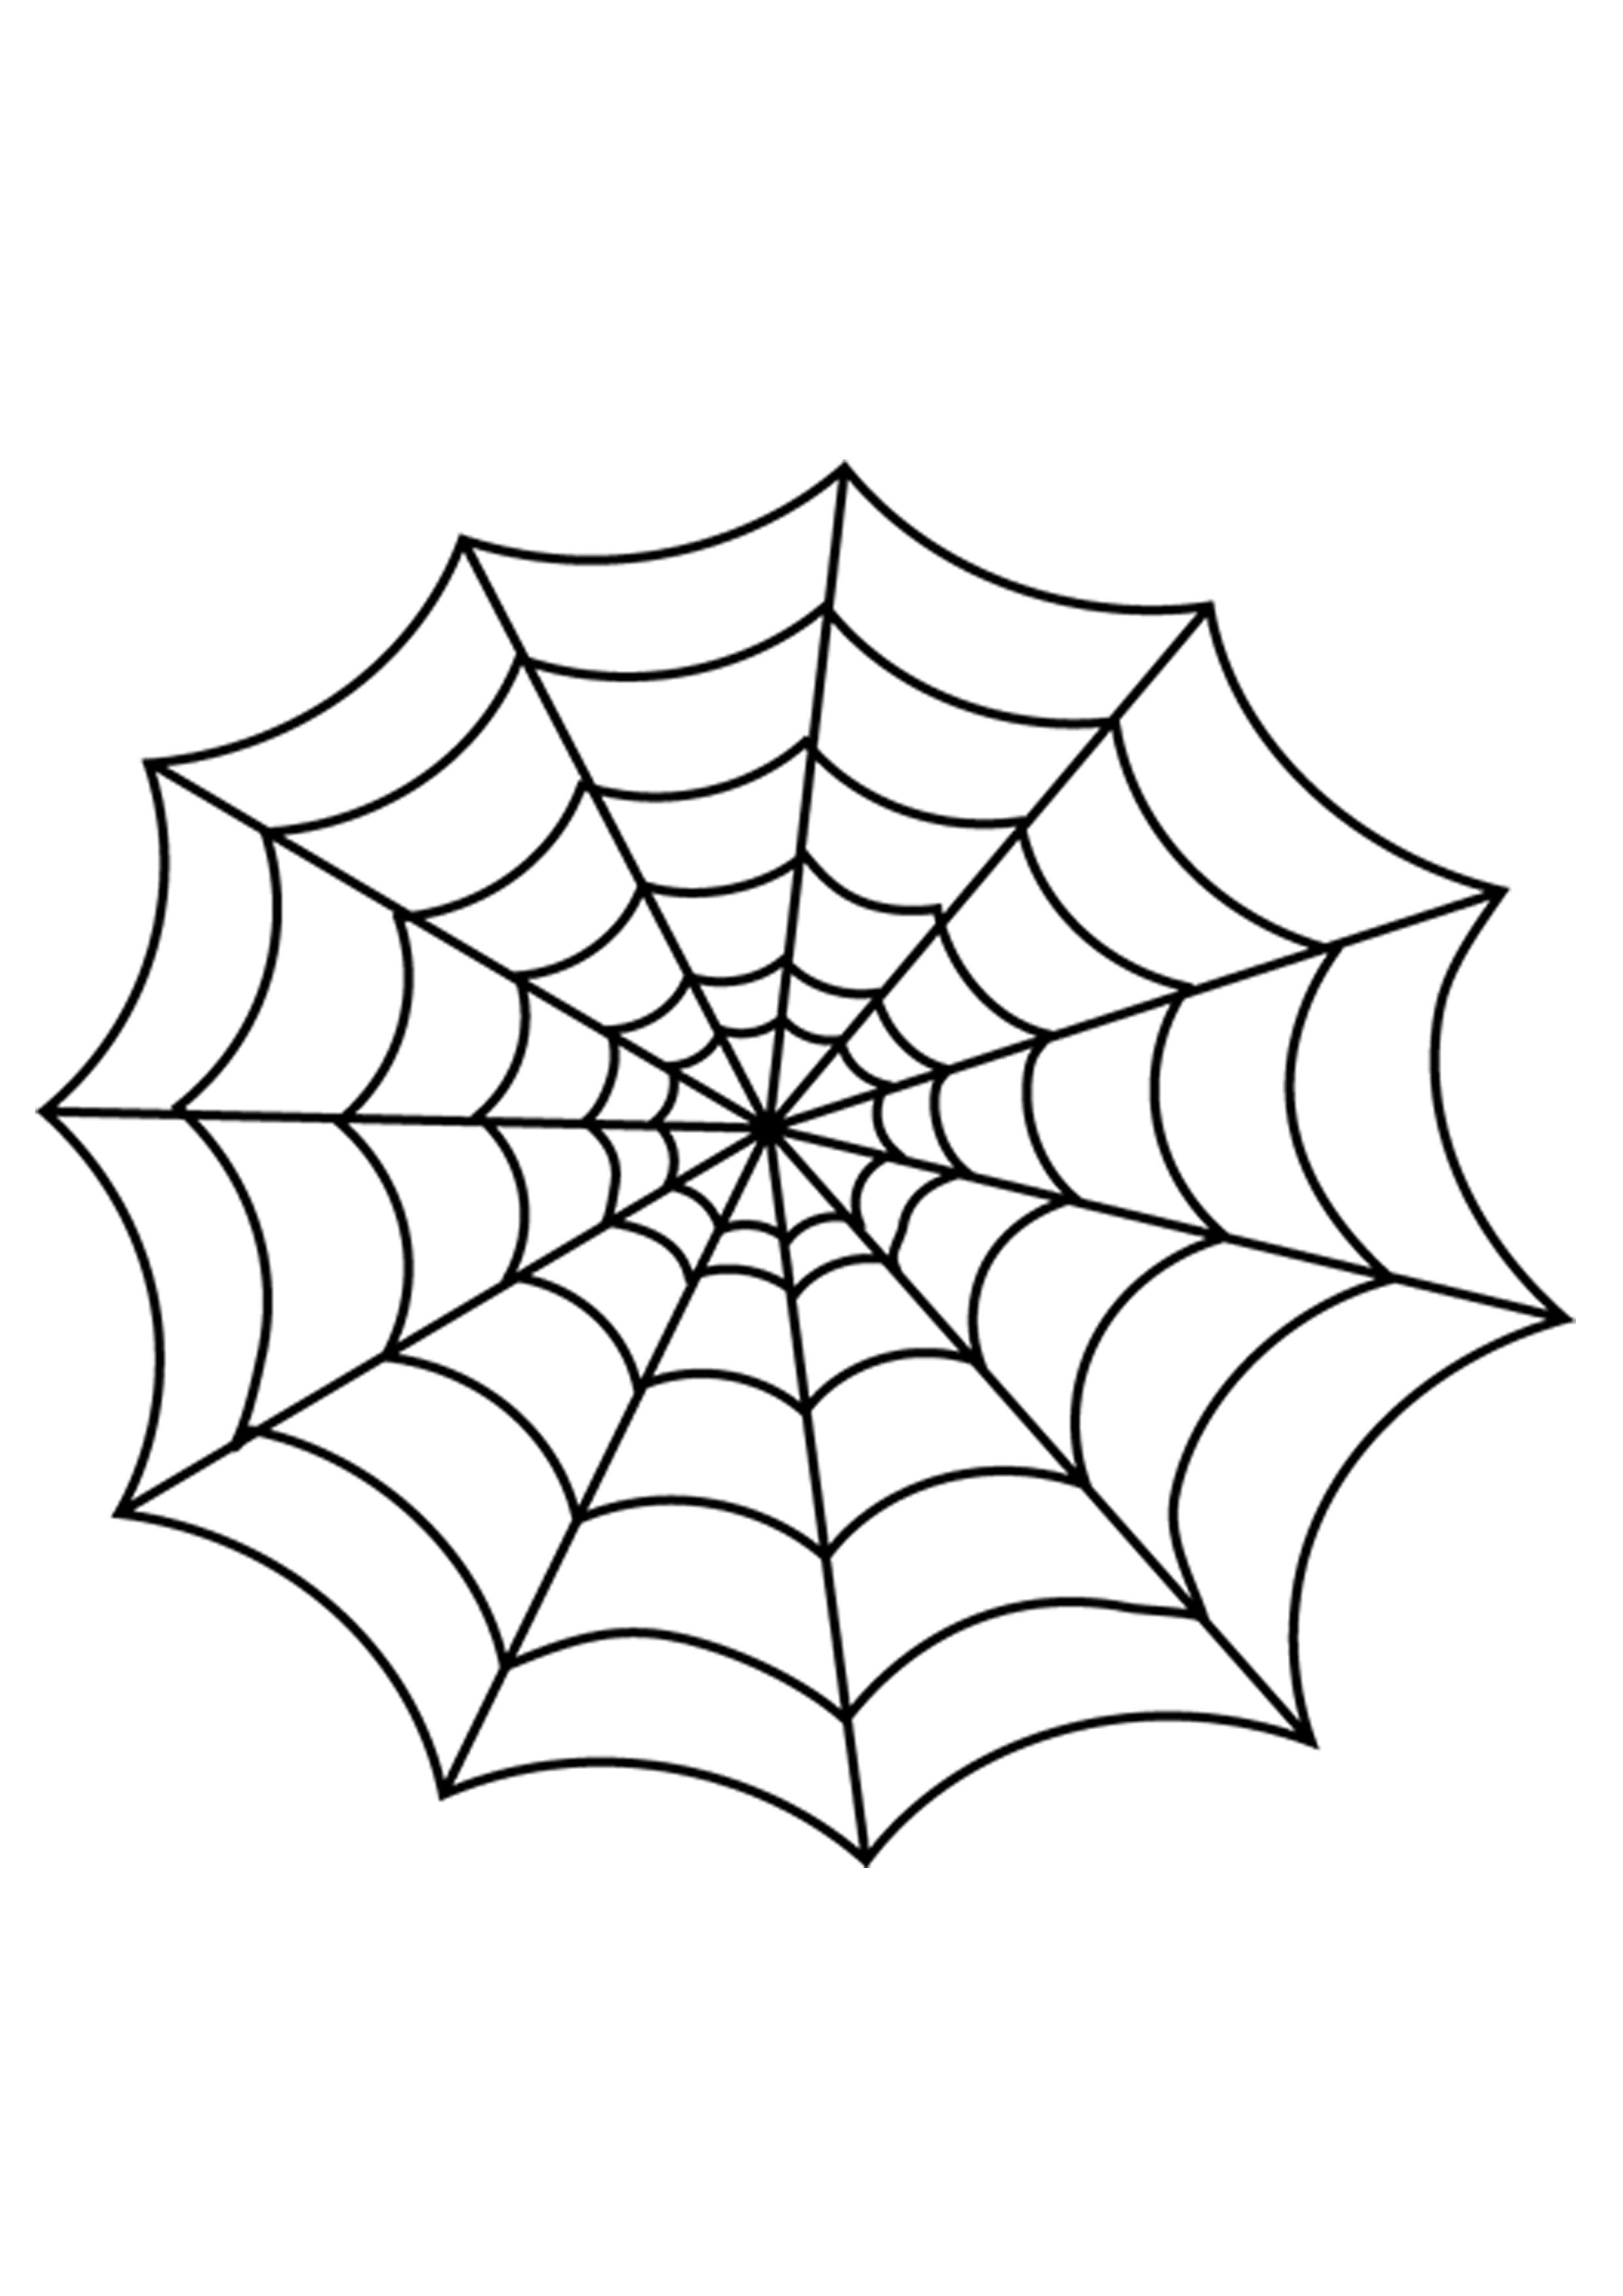 How To Make Glitter Glue Spider Web Halloween Decorations - Spider Web Stencil Free Printable